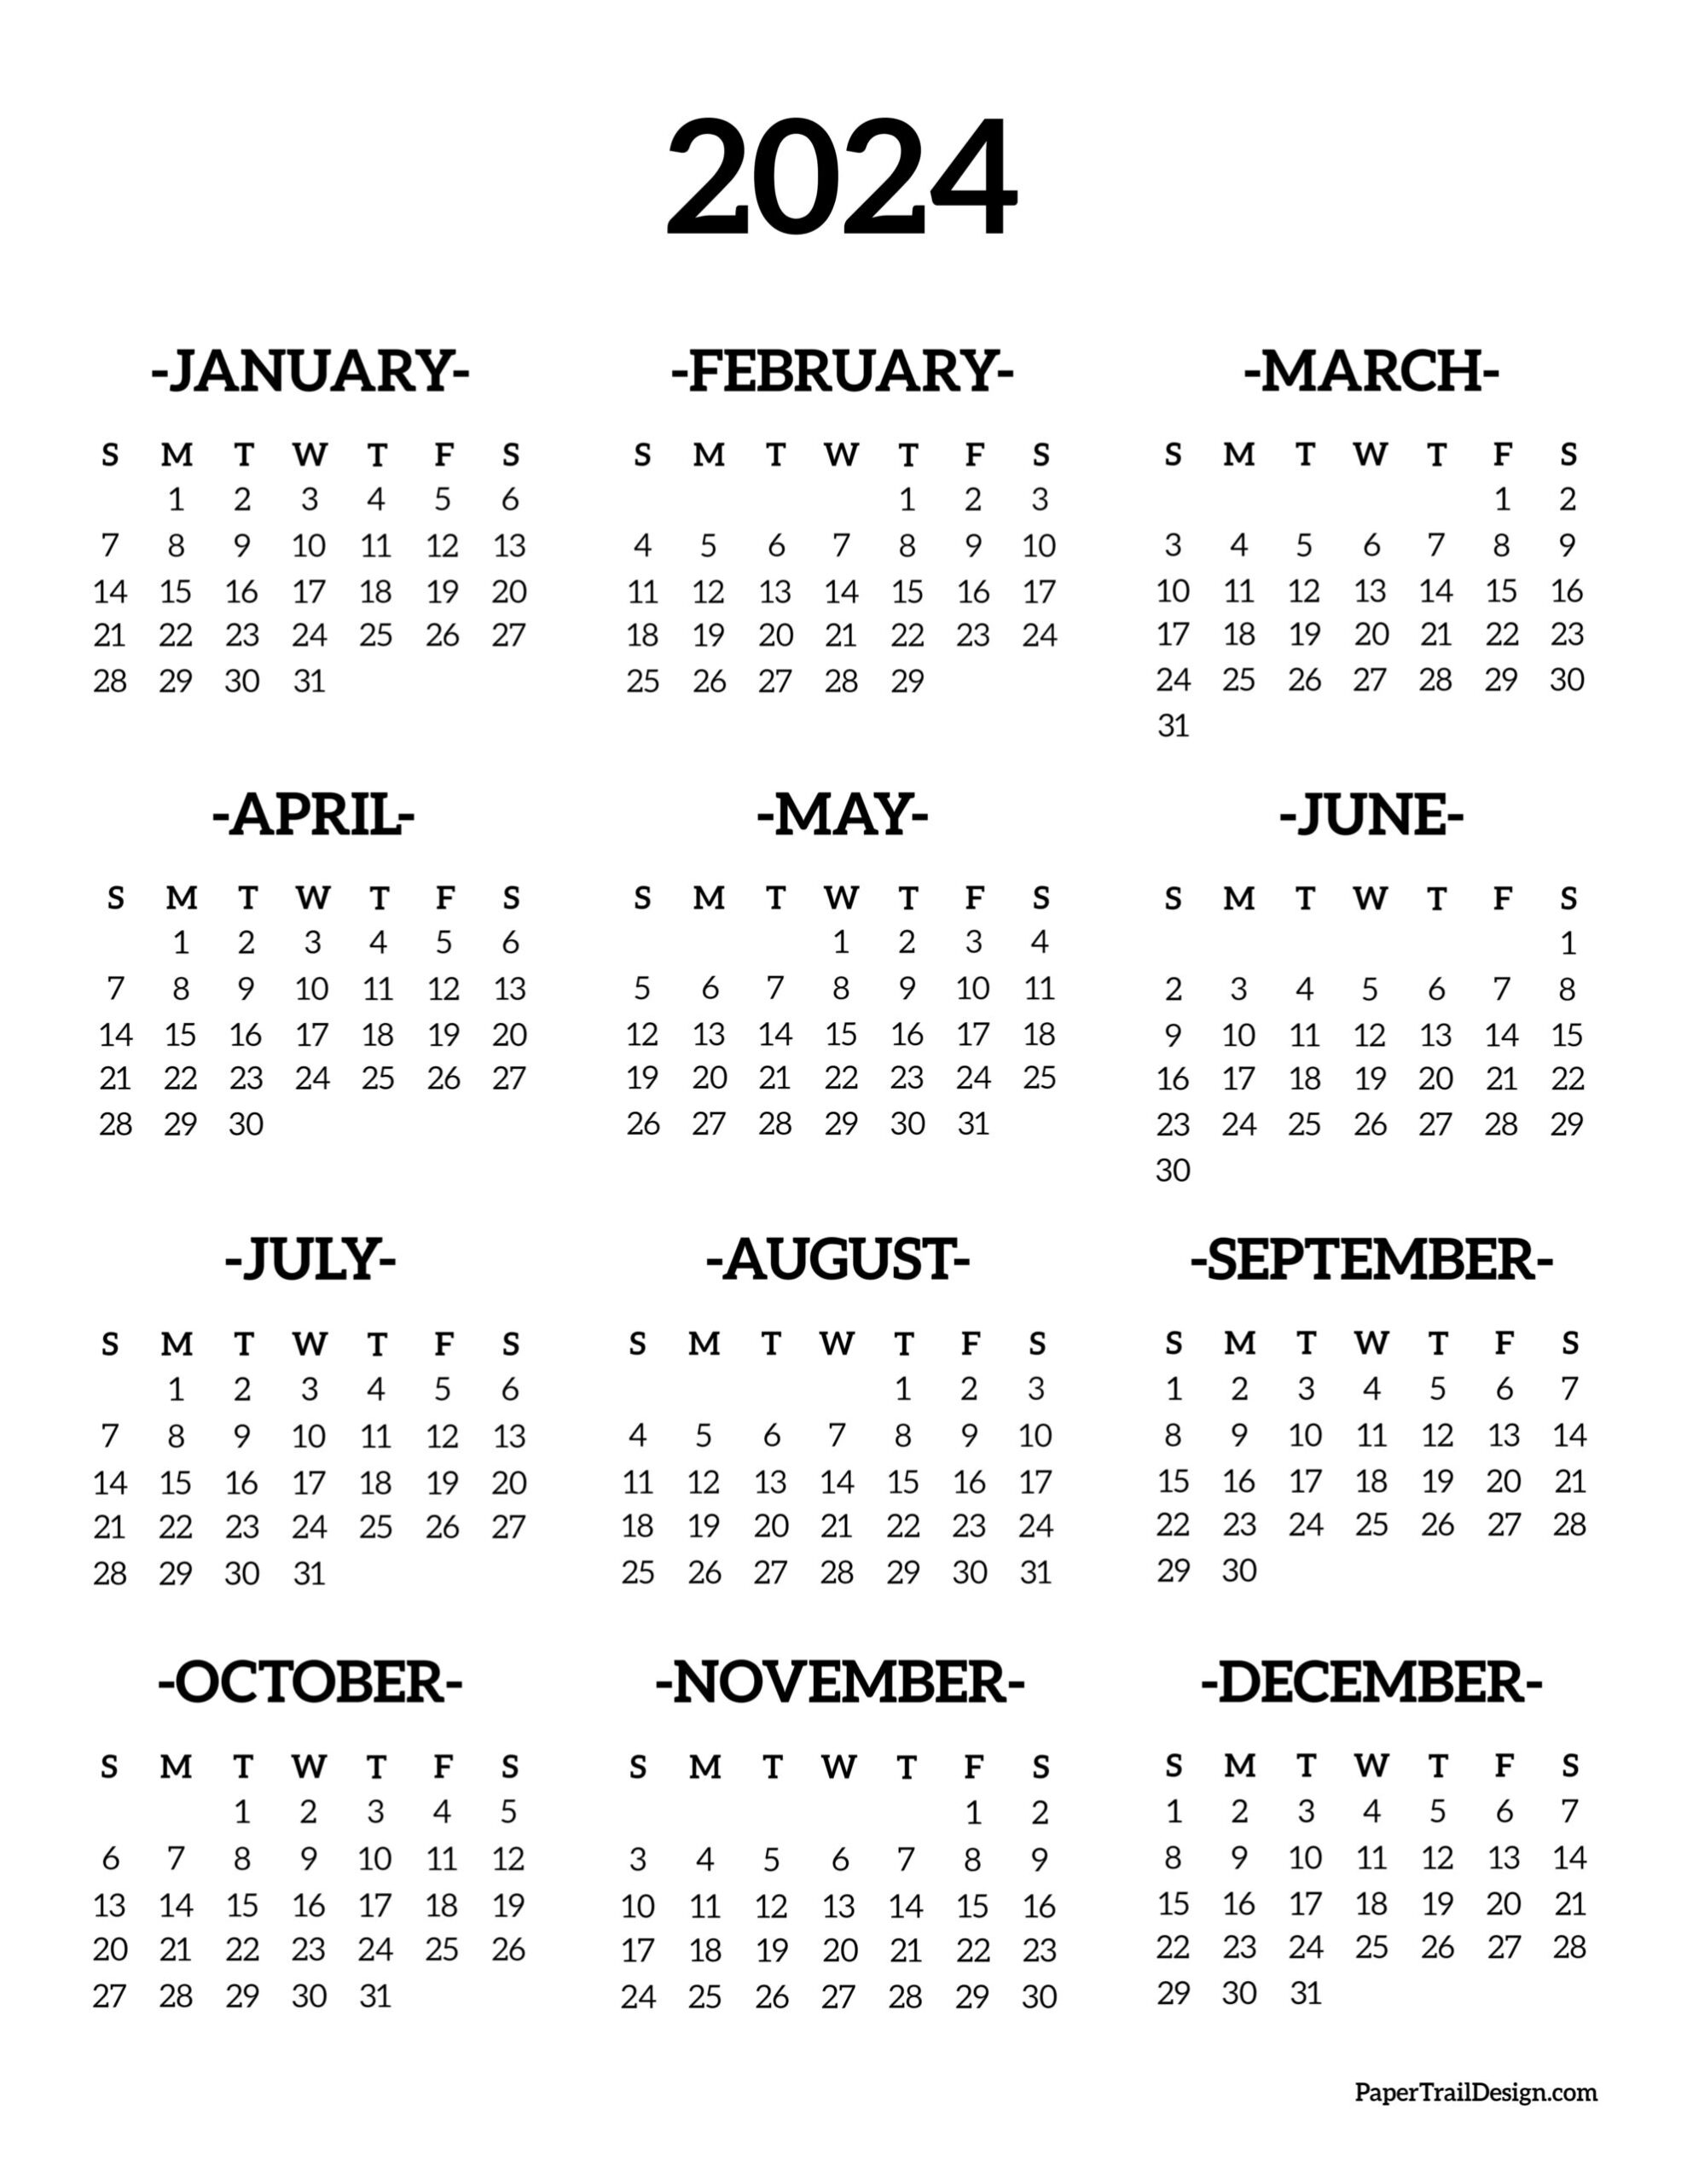 Calendar 2024 Printable One Page - Paper Trail Design for Annual Calendar 2024 Printable